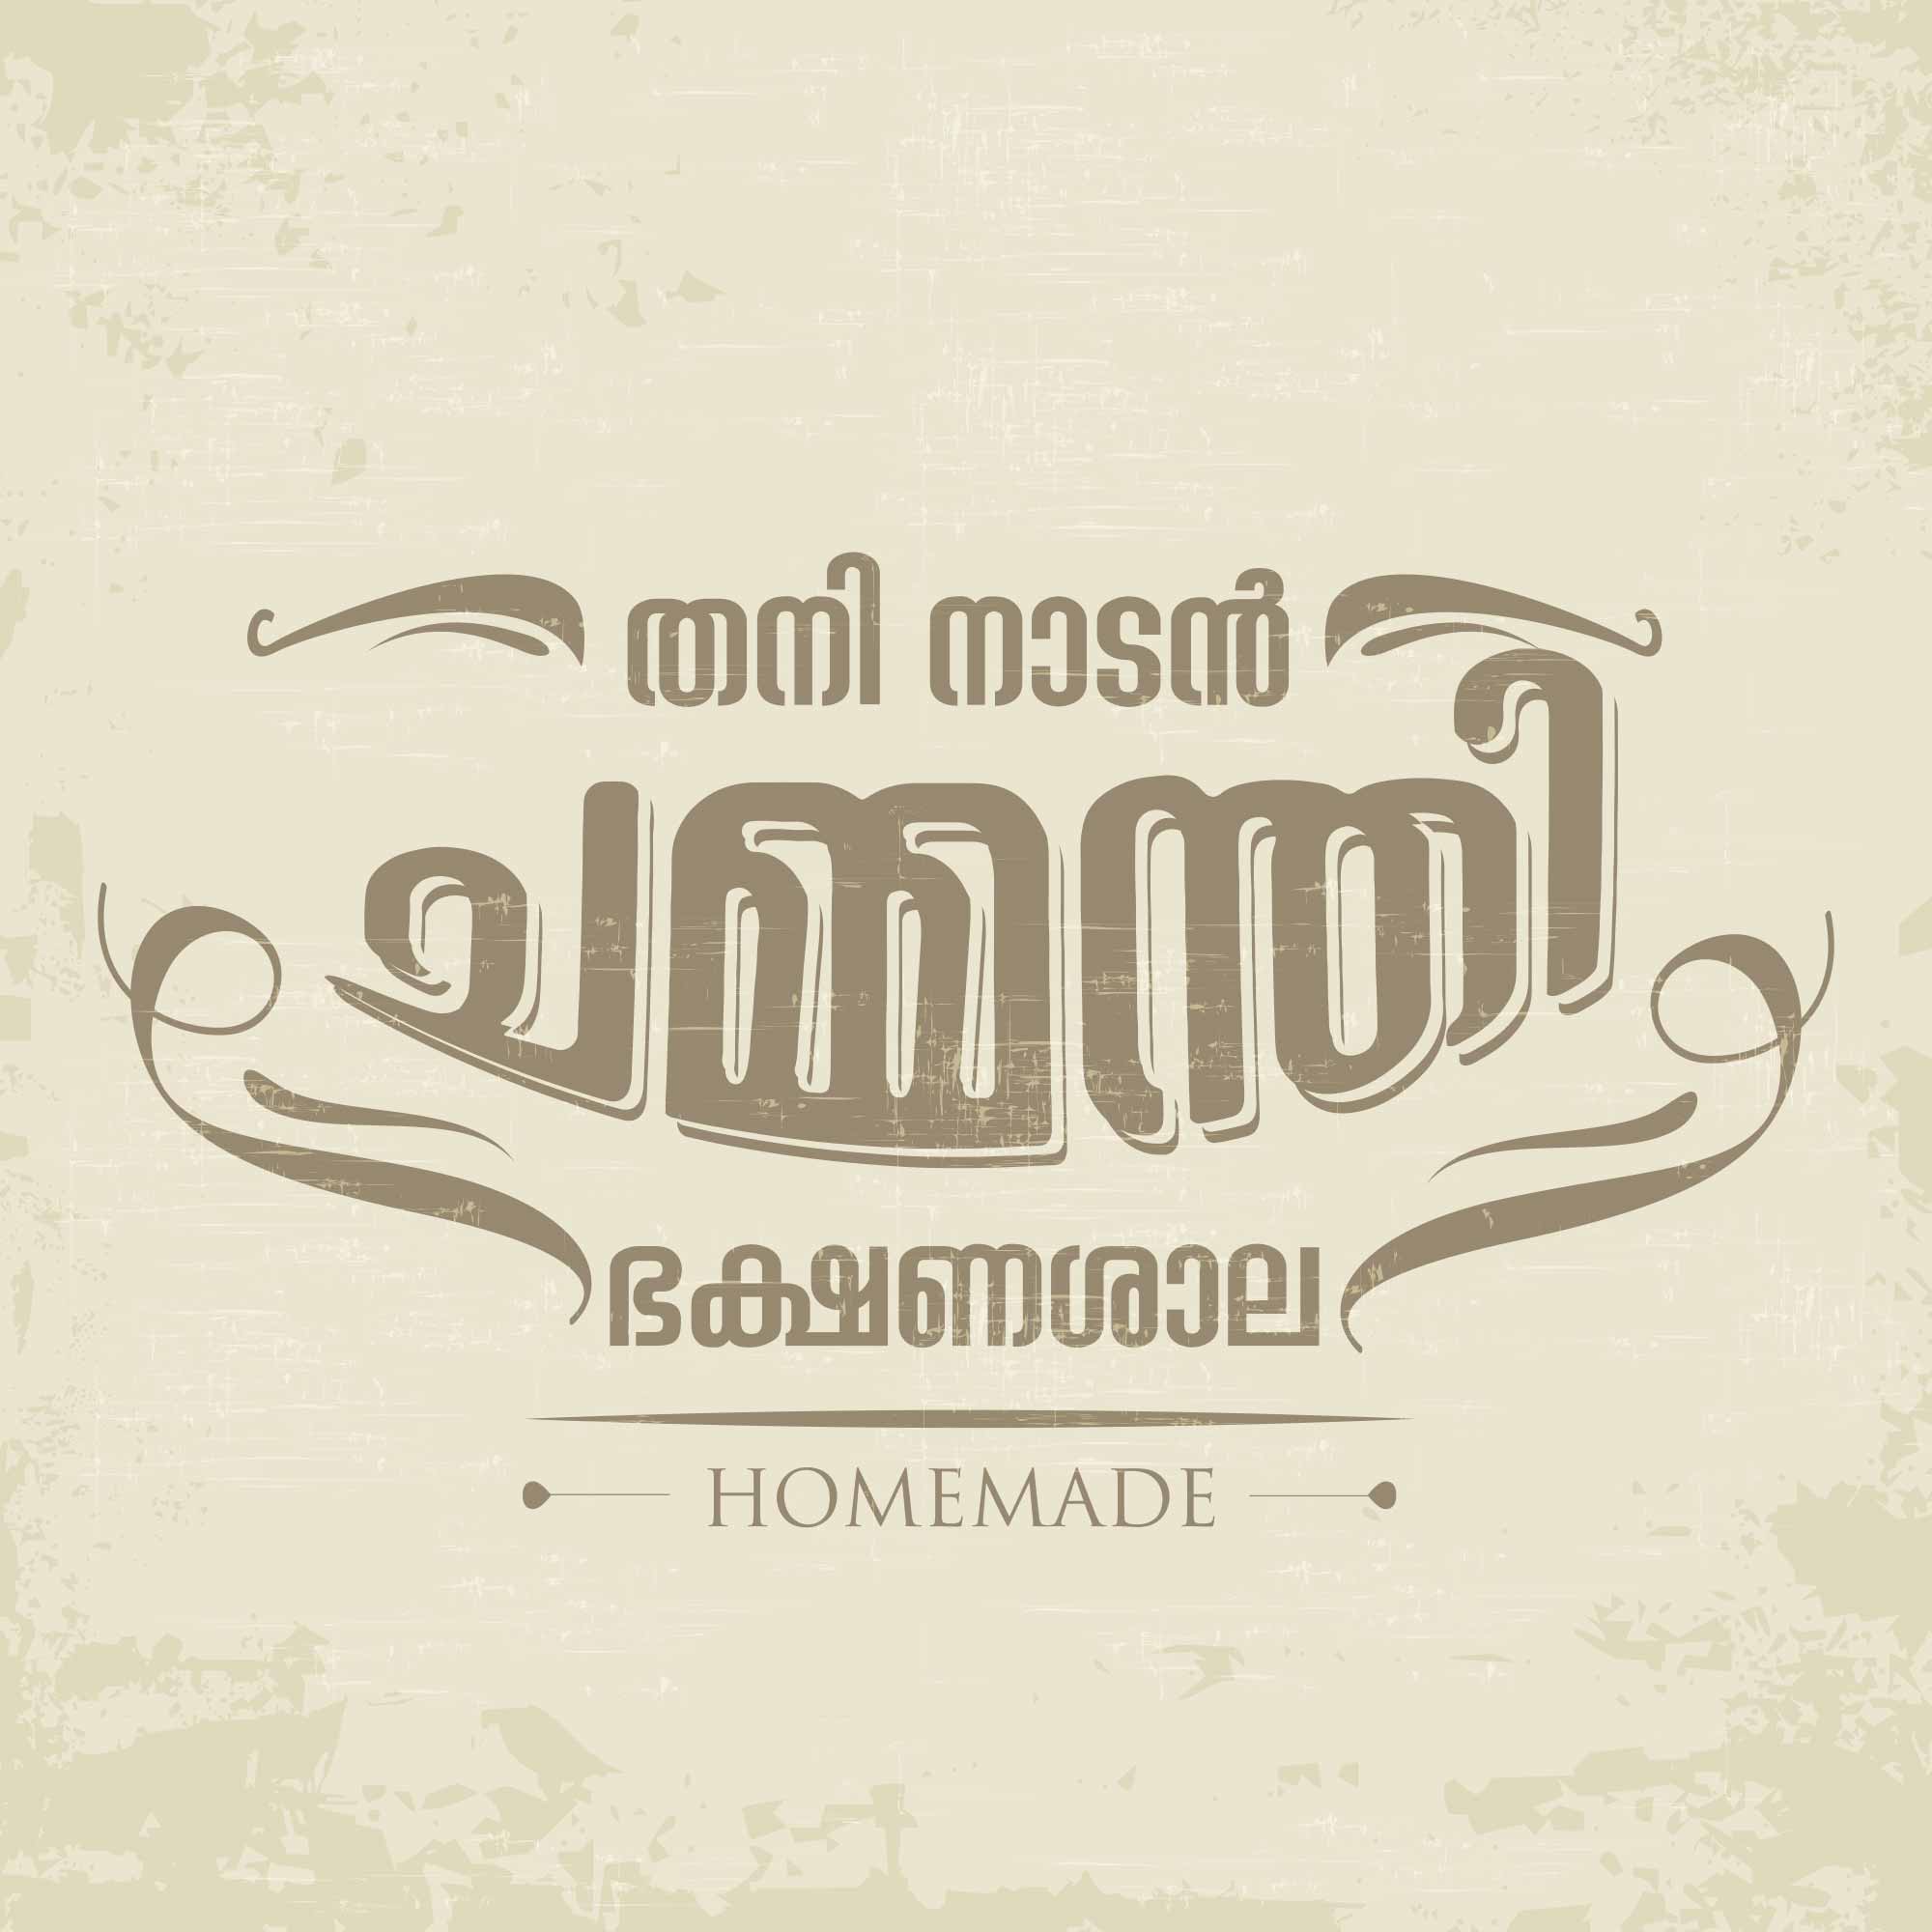 Restaurant logo expert in Kerala